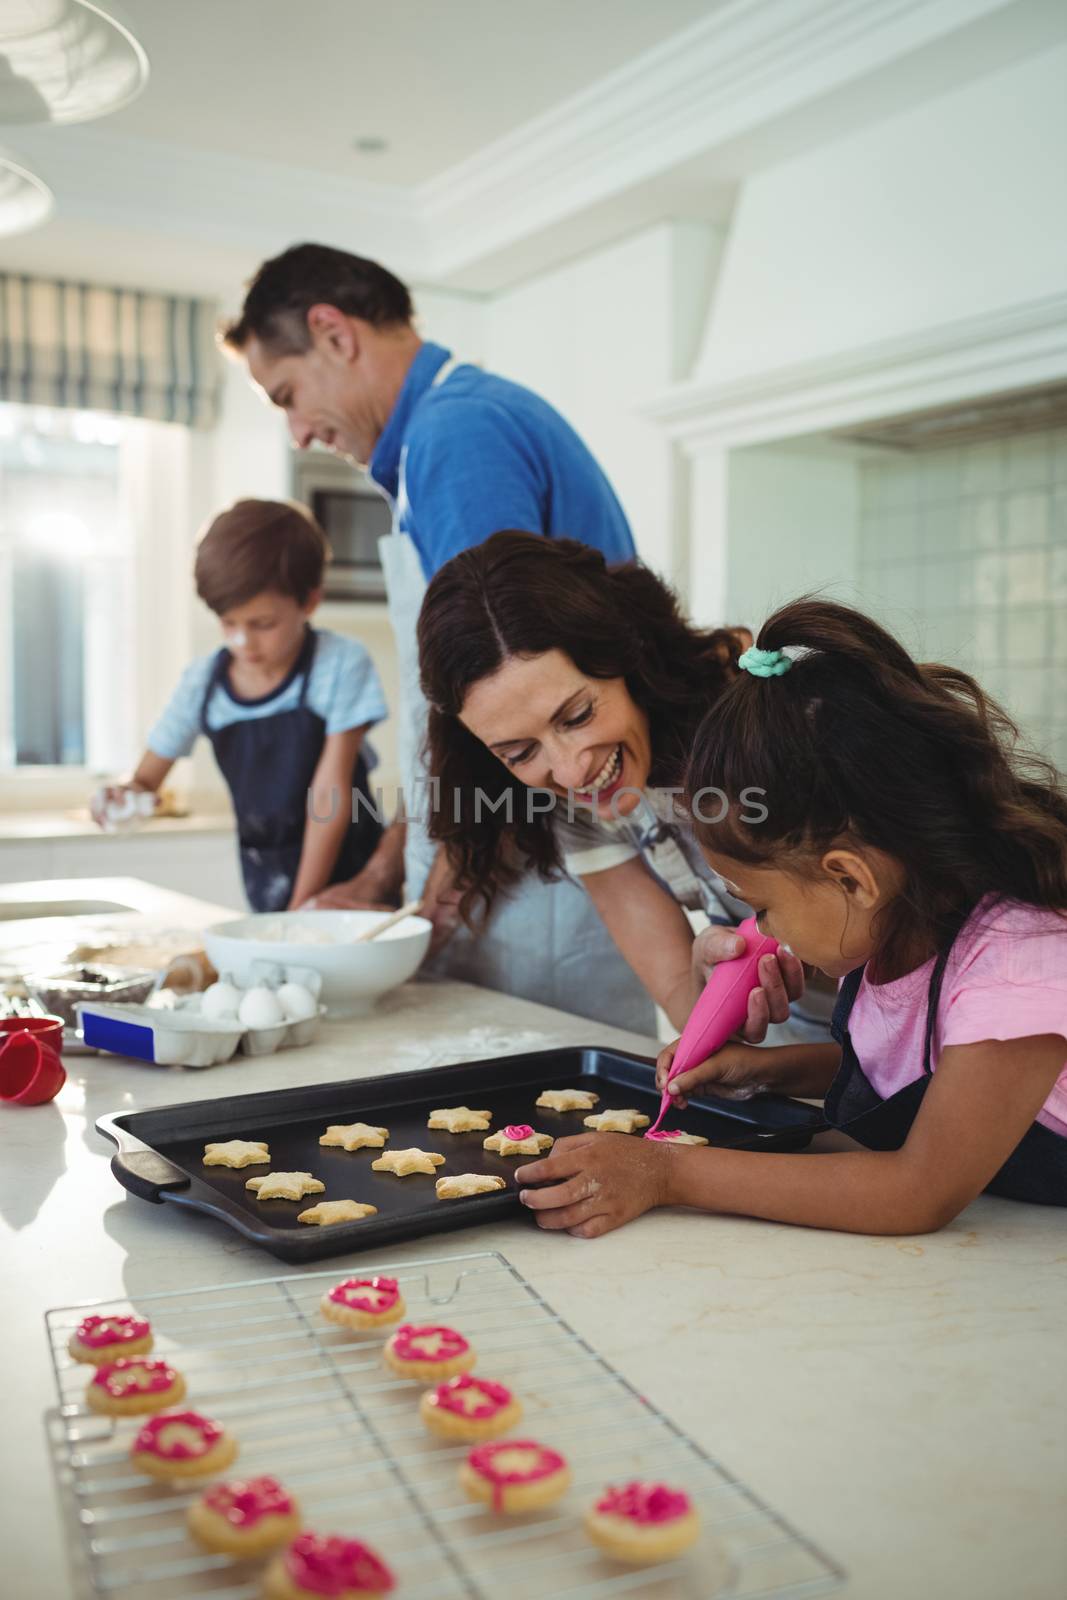 Happy family preparing cookies in kitchen by Wavebreakmedia